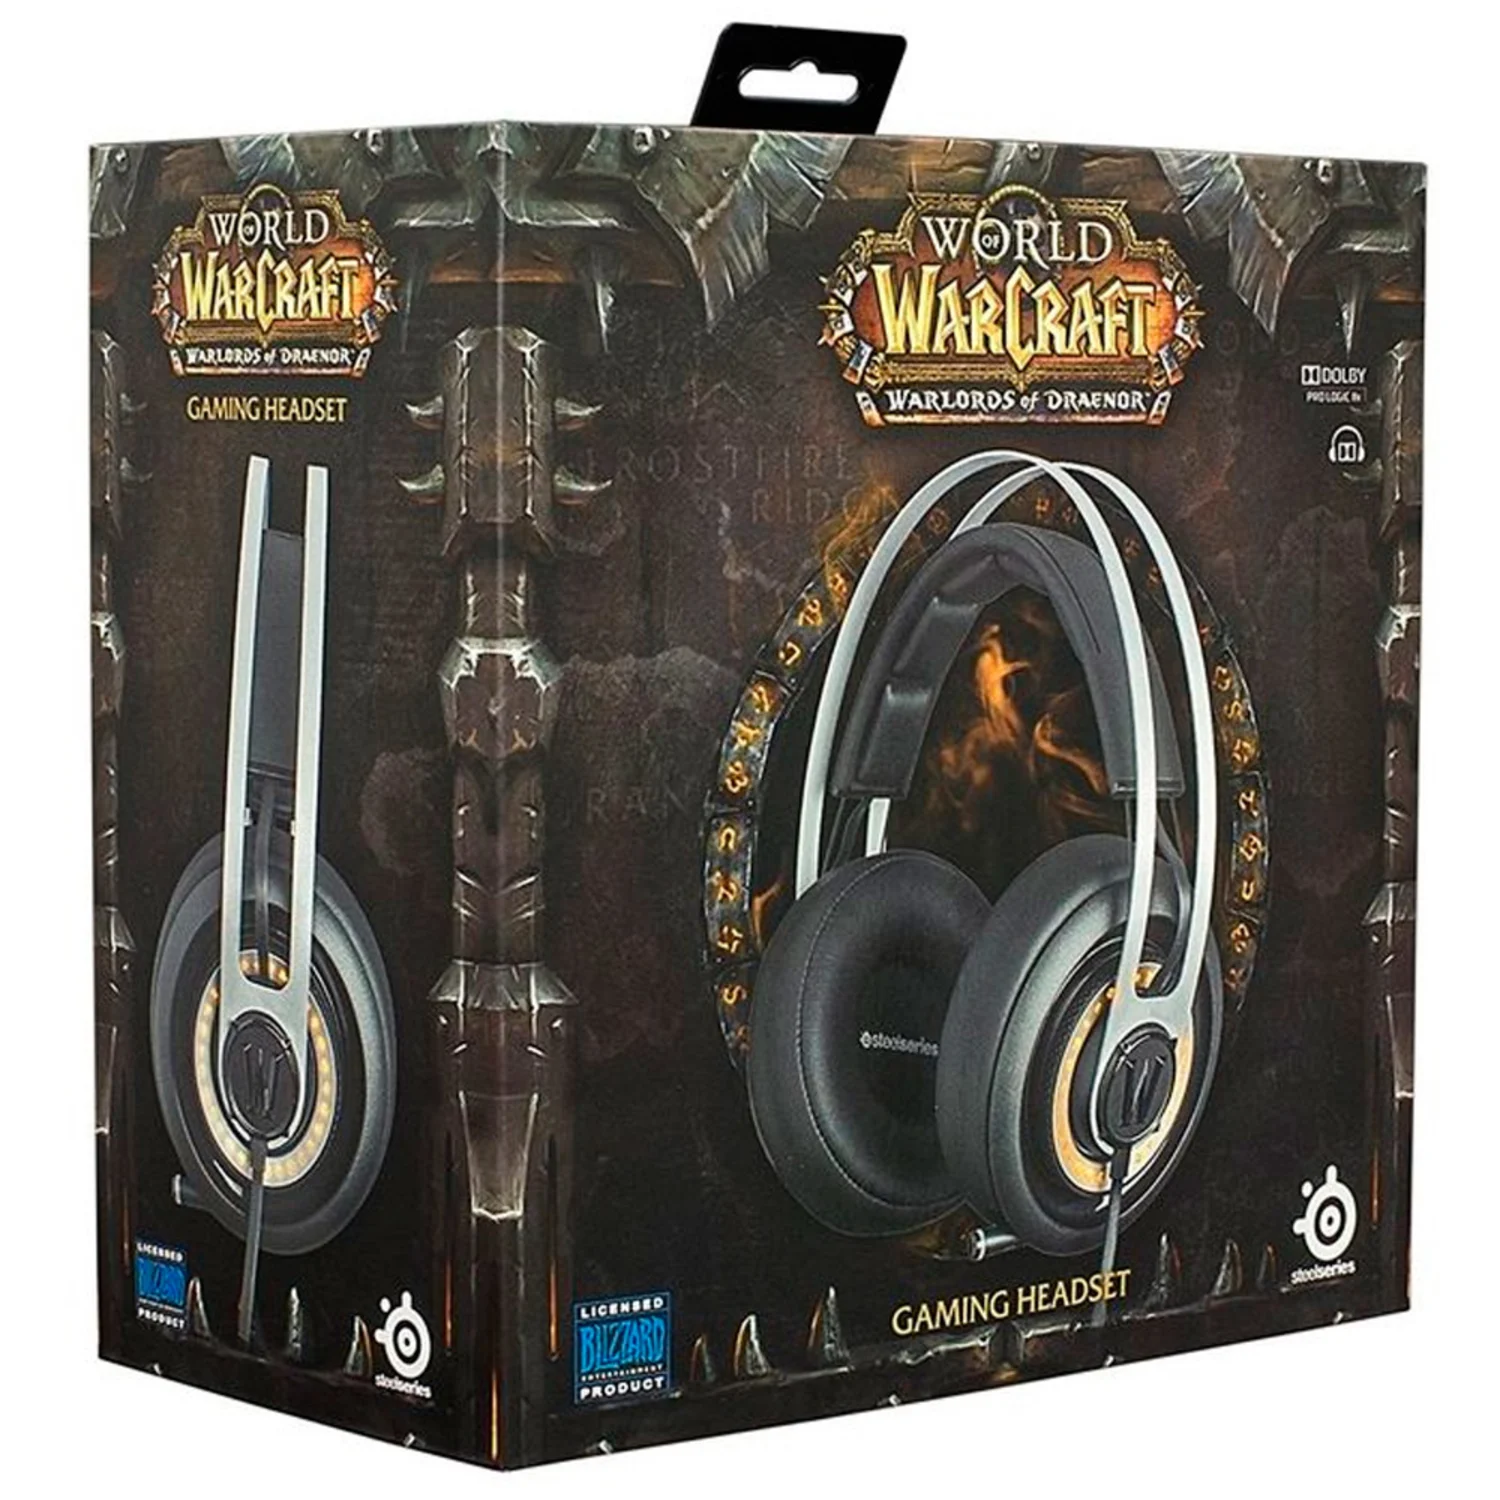 Headset Steelseries Siberia V2 World Of Warcraft - Preto e Branco (51154)